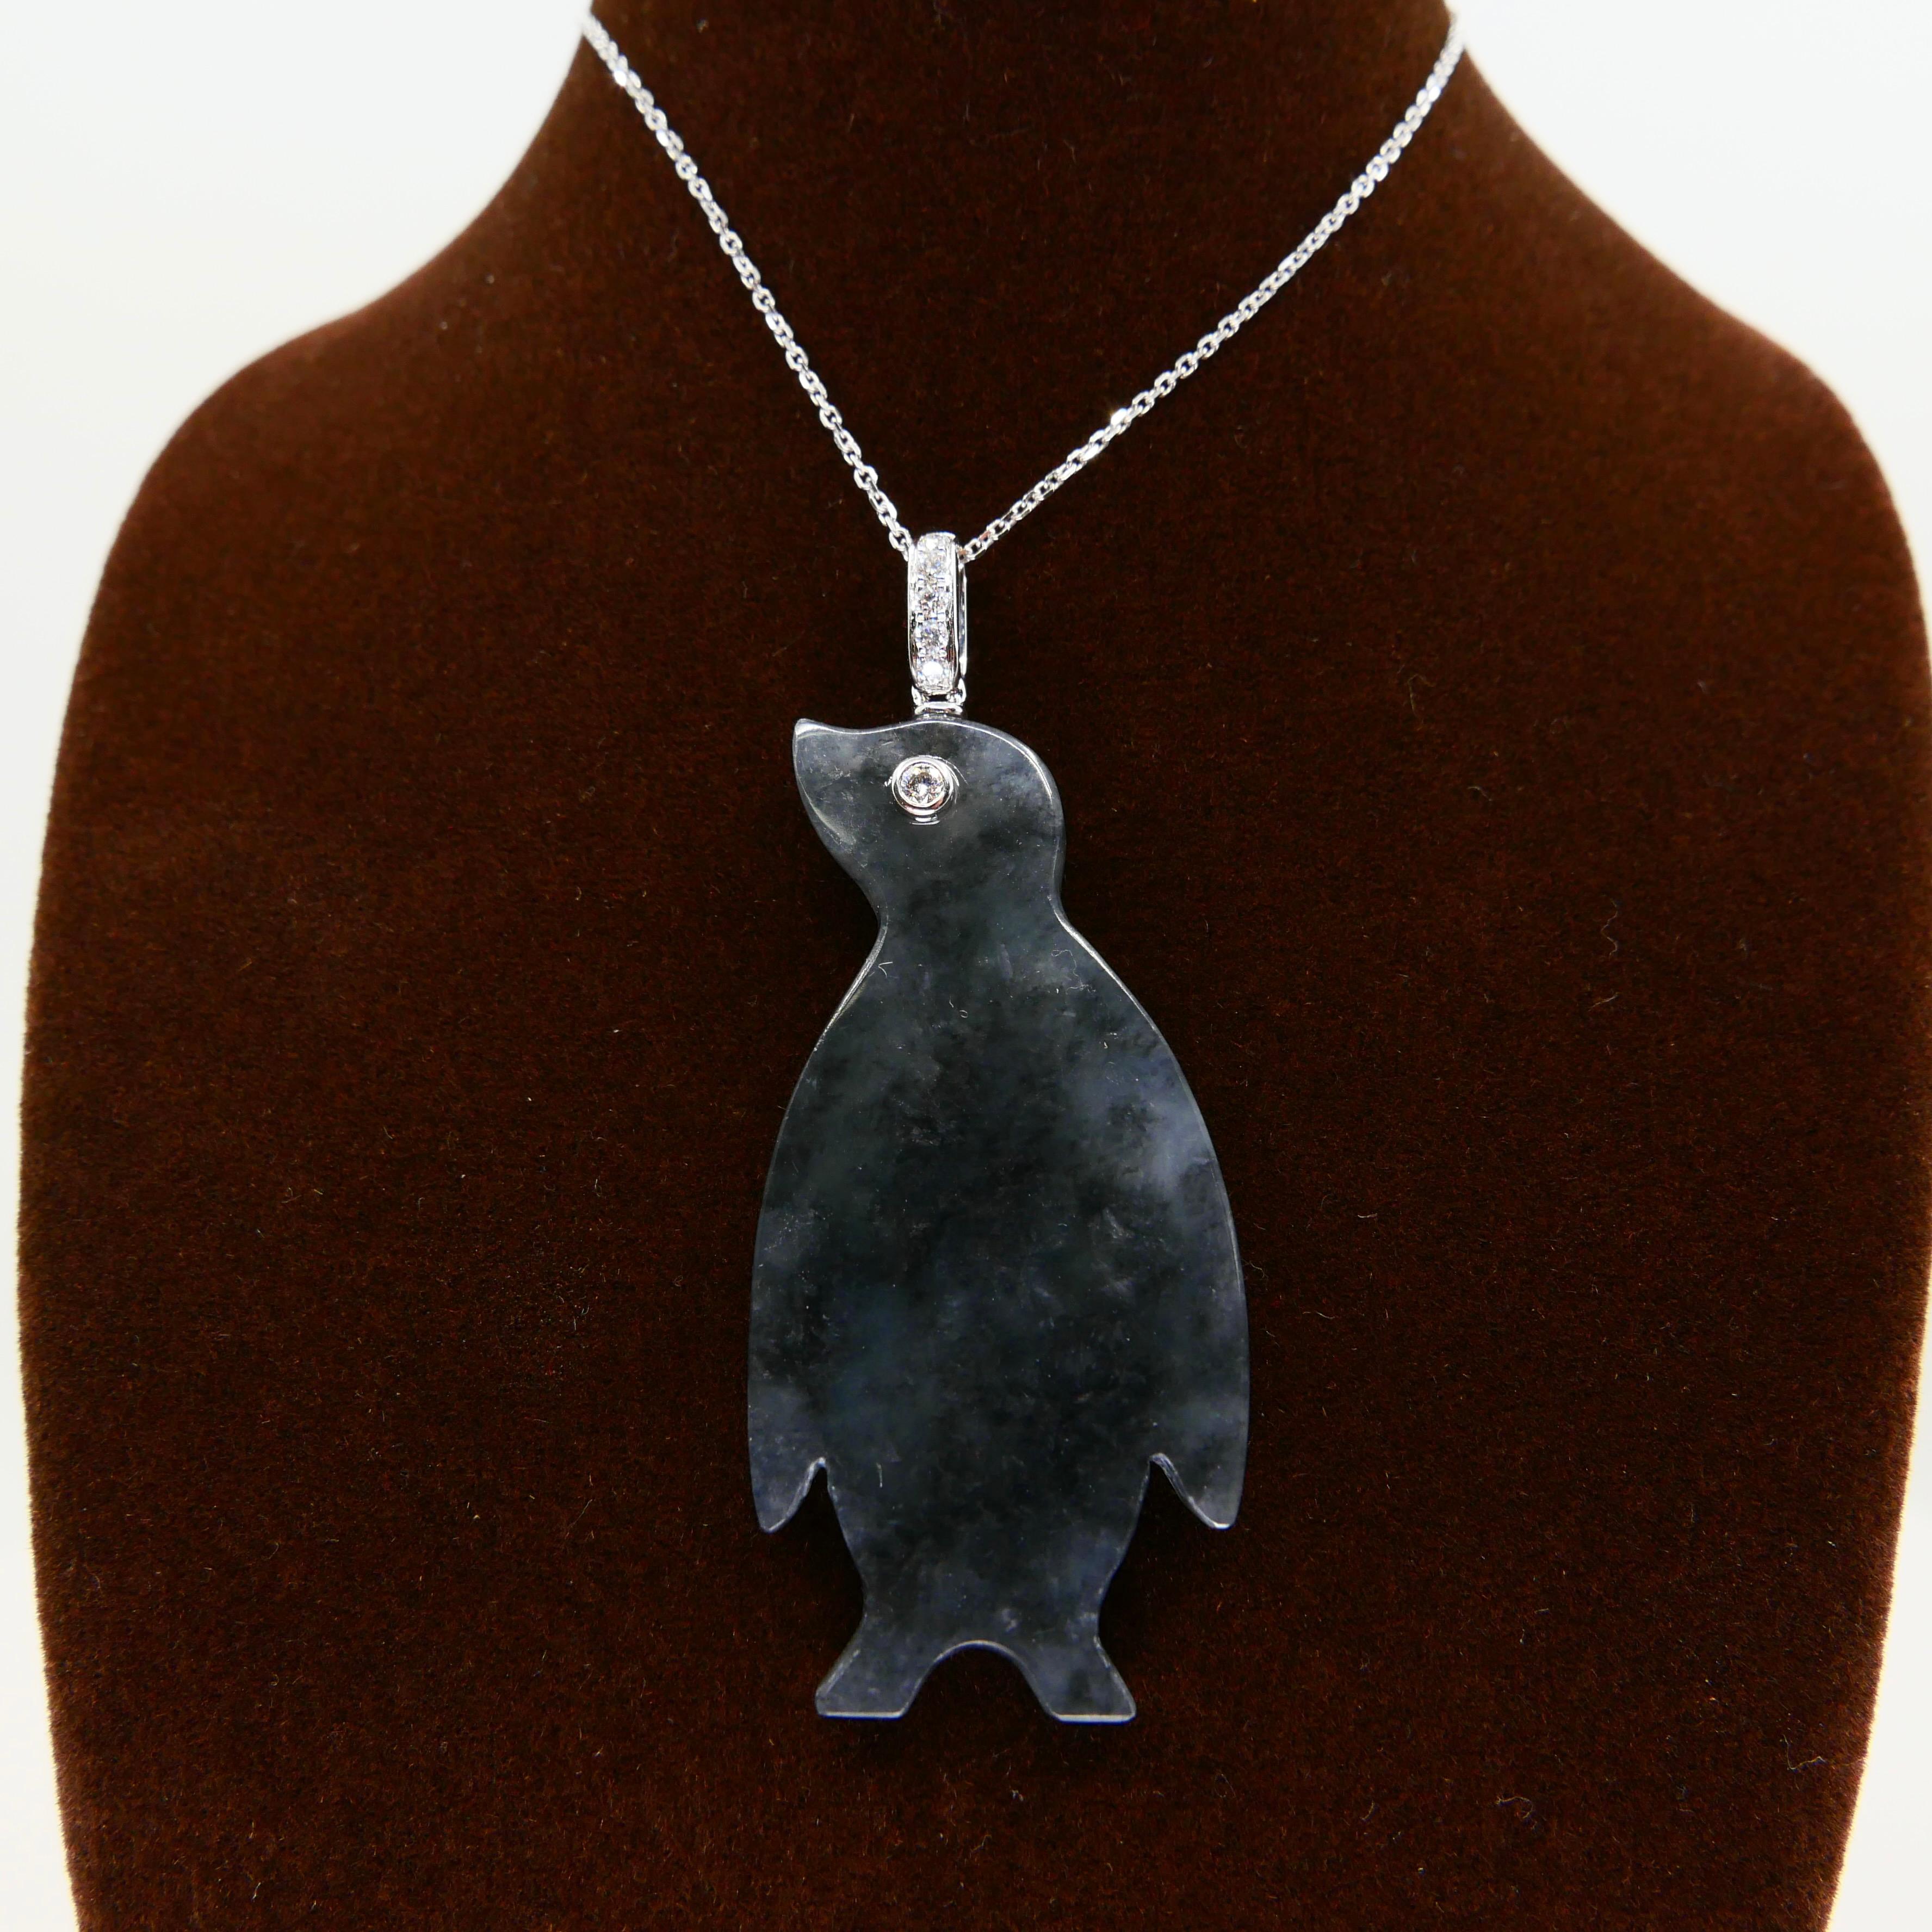 Certified Icy Black Jade & Diamond Penguin Pendant Necklace, Specialty Cut 7